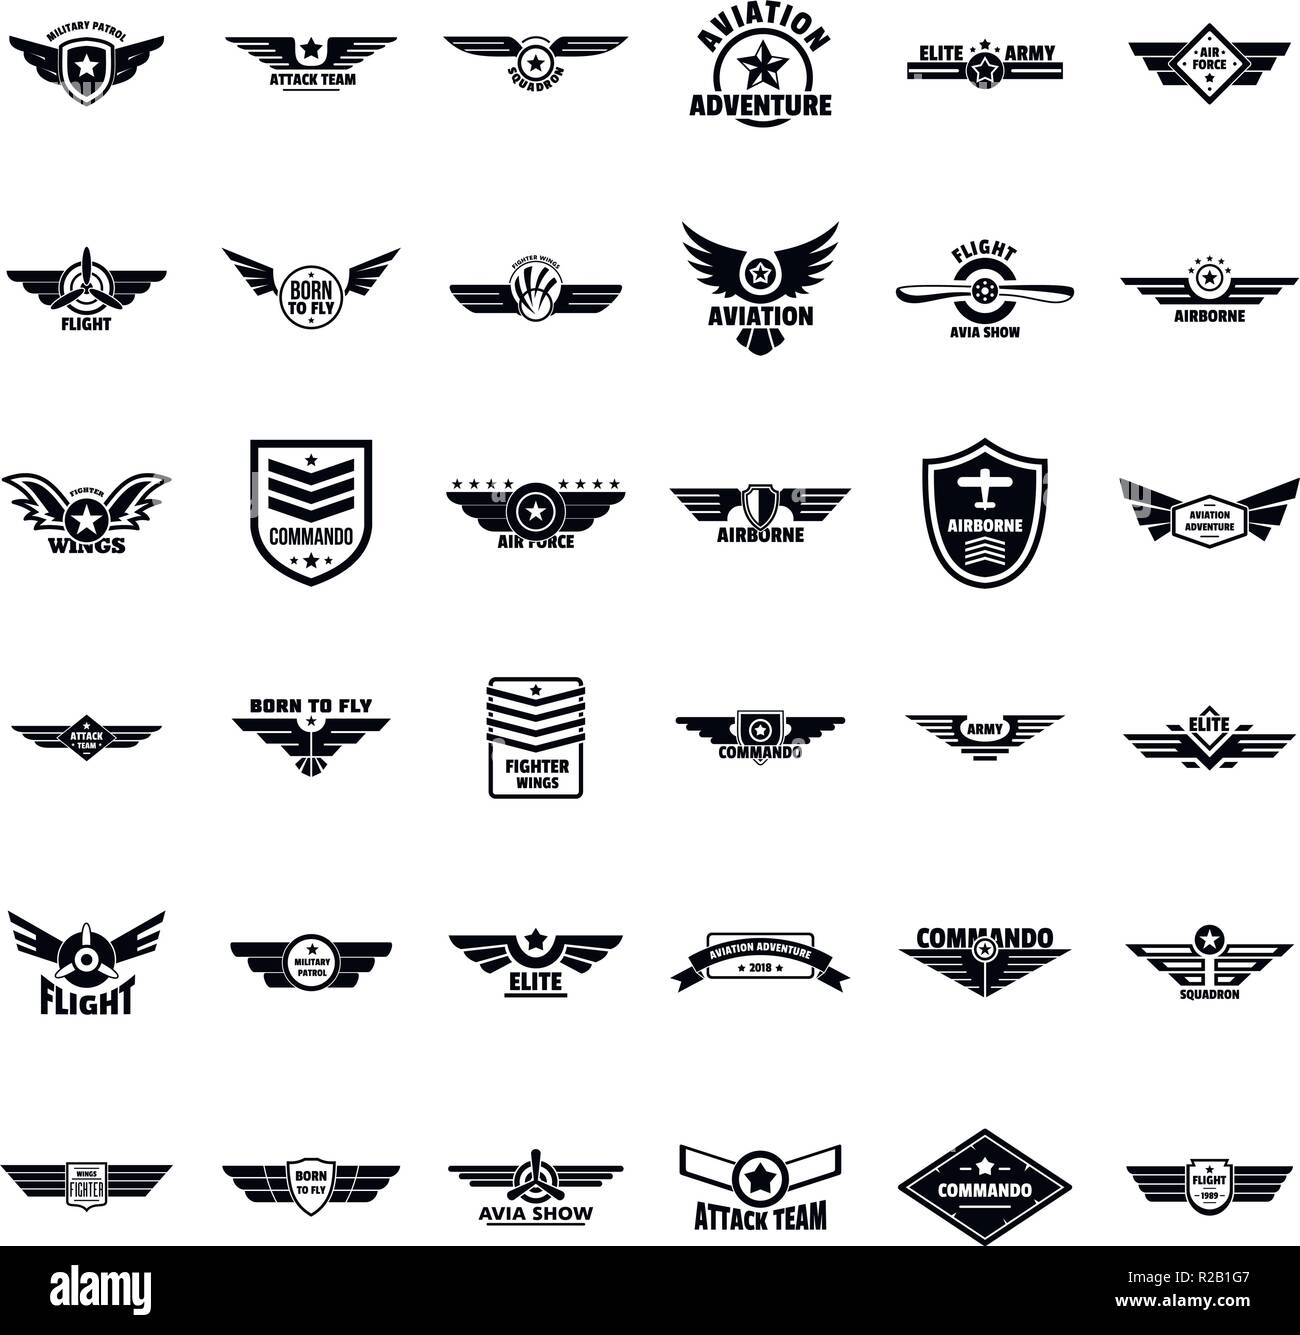 https://c8.alamy.com/compde/r2b1g7/luftwaffe-militar-armee-abzeichen-logo-symbole-gesetzt-einfache-abbildung-von-36-luftwaffe-militar-armee-abzeichen-logo-vector-icons-fur-web-r2b1g7.jpg